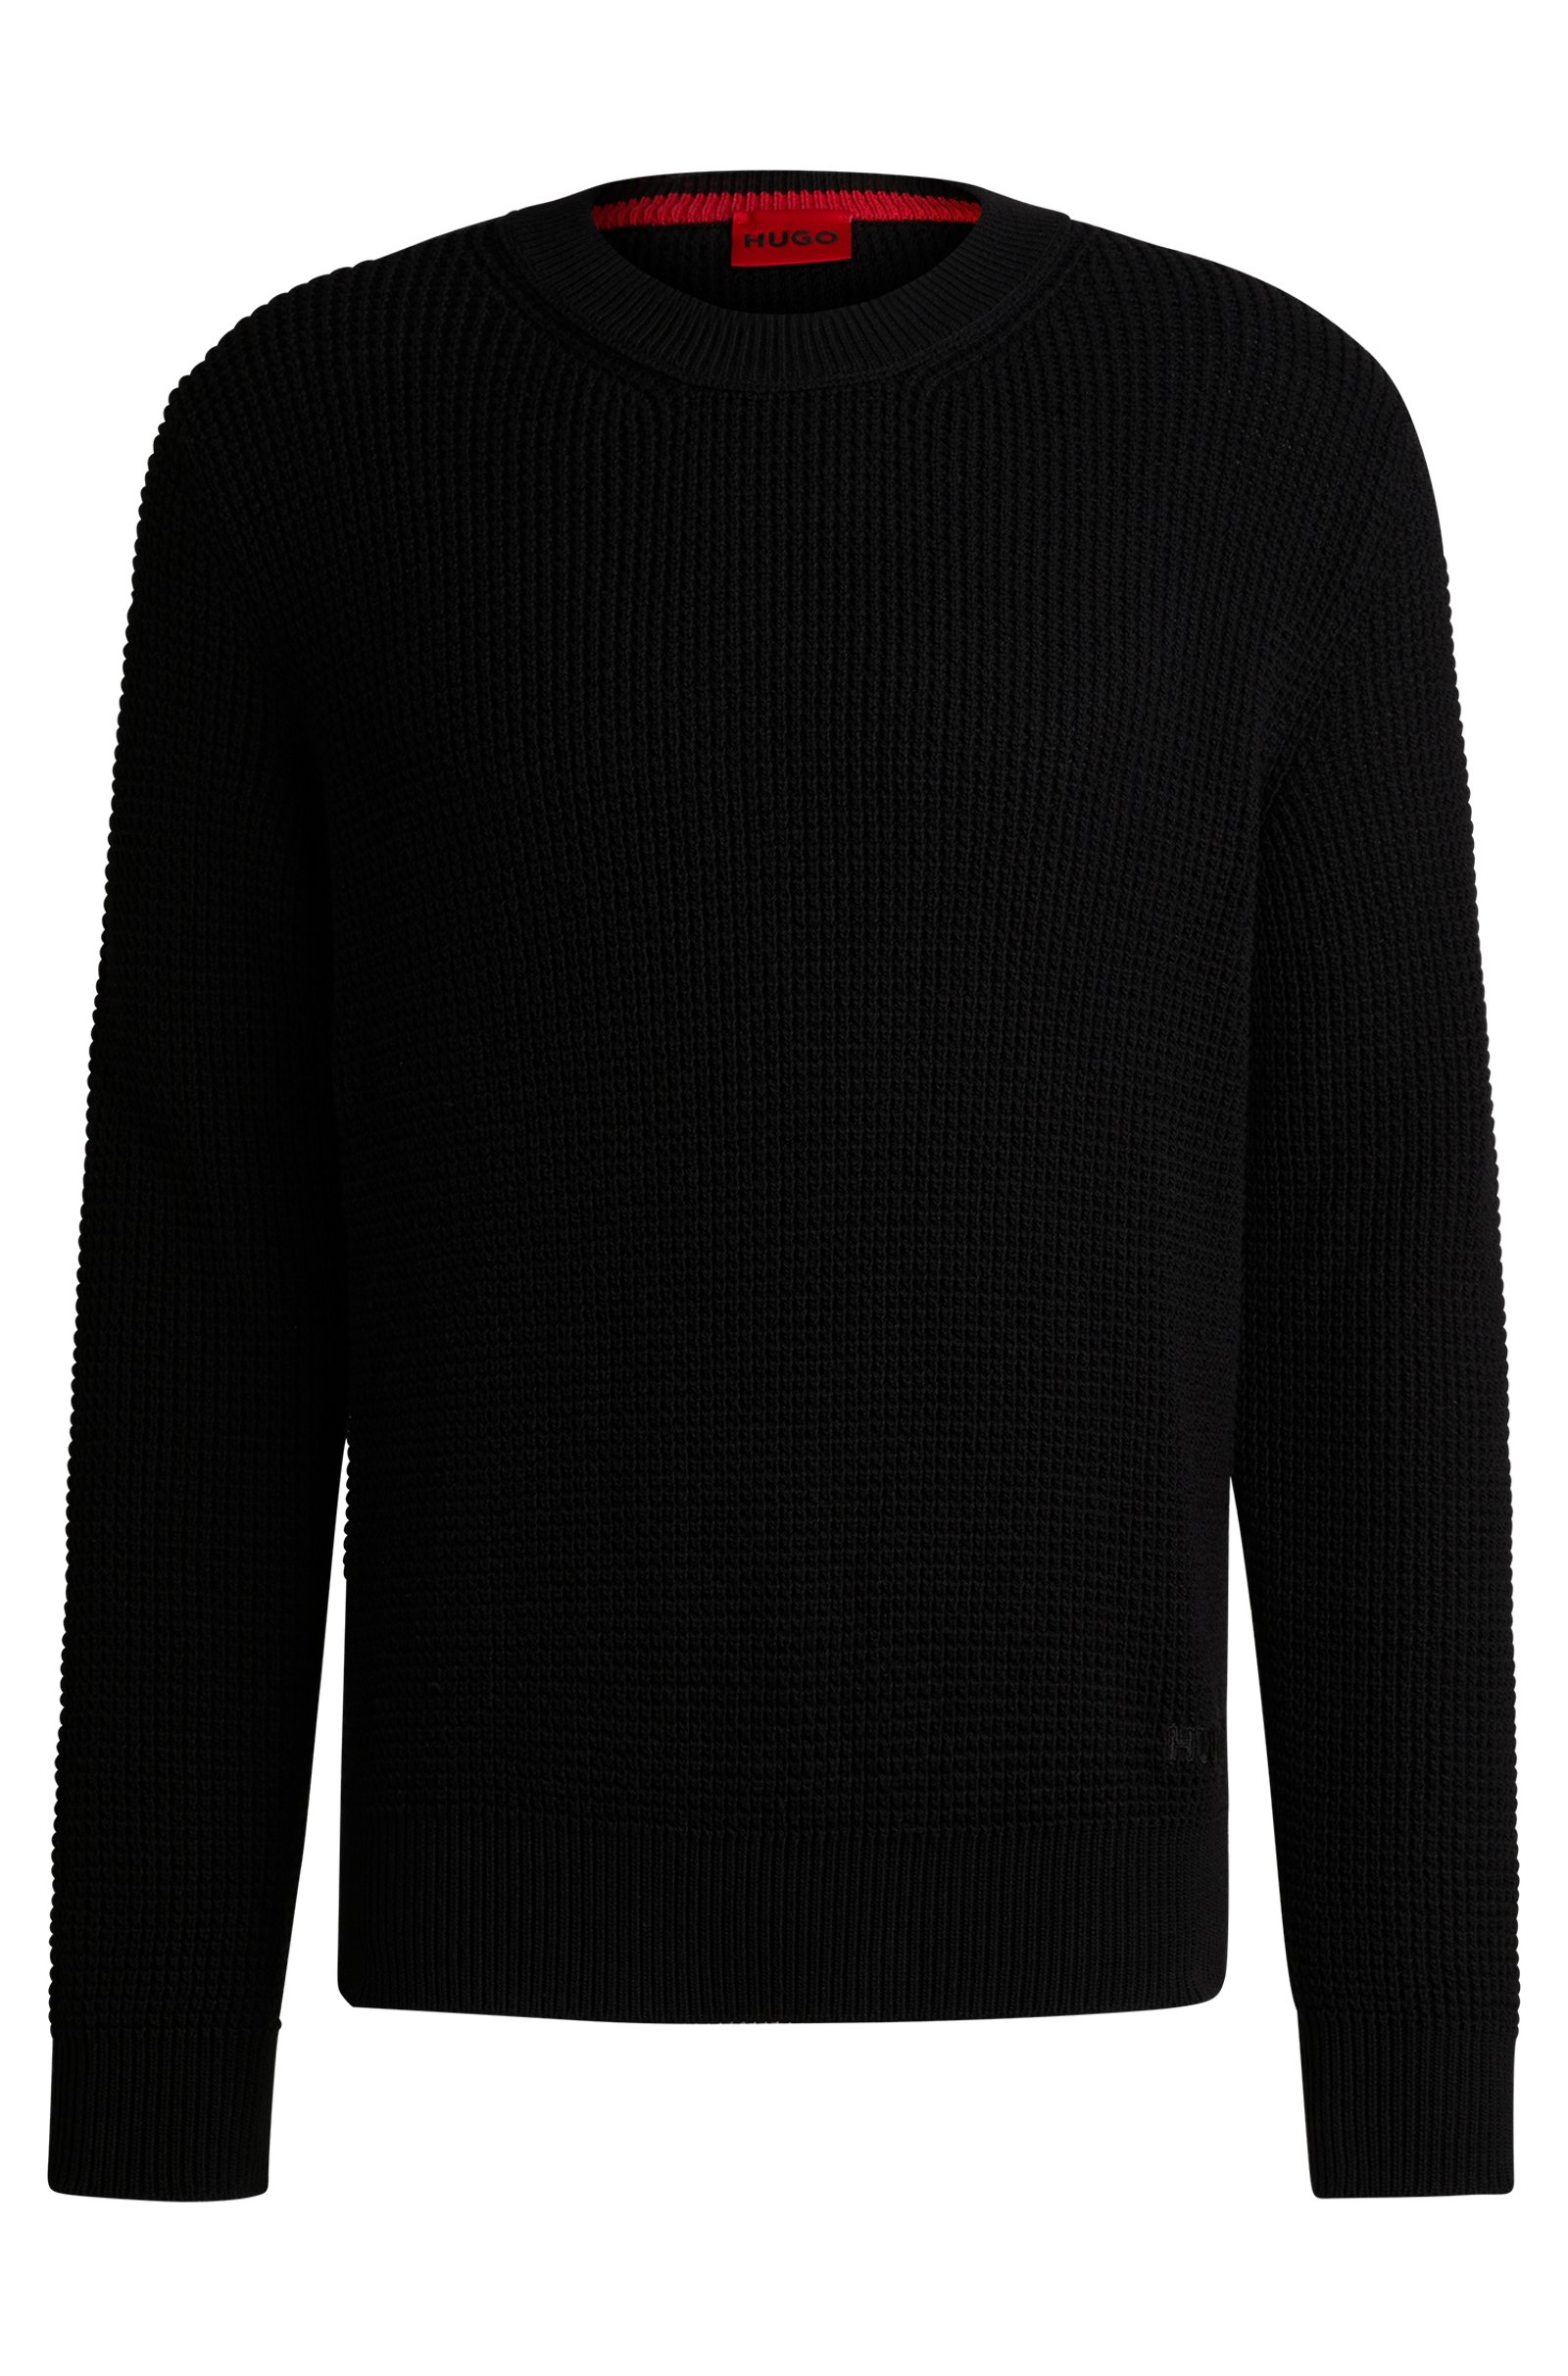 Свитер Hugo Relaxed-fit With Knitted Structure And Crew Neckline, черный koan knitwear свитер с круглым вырезом и узором из кос белый